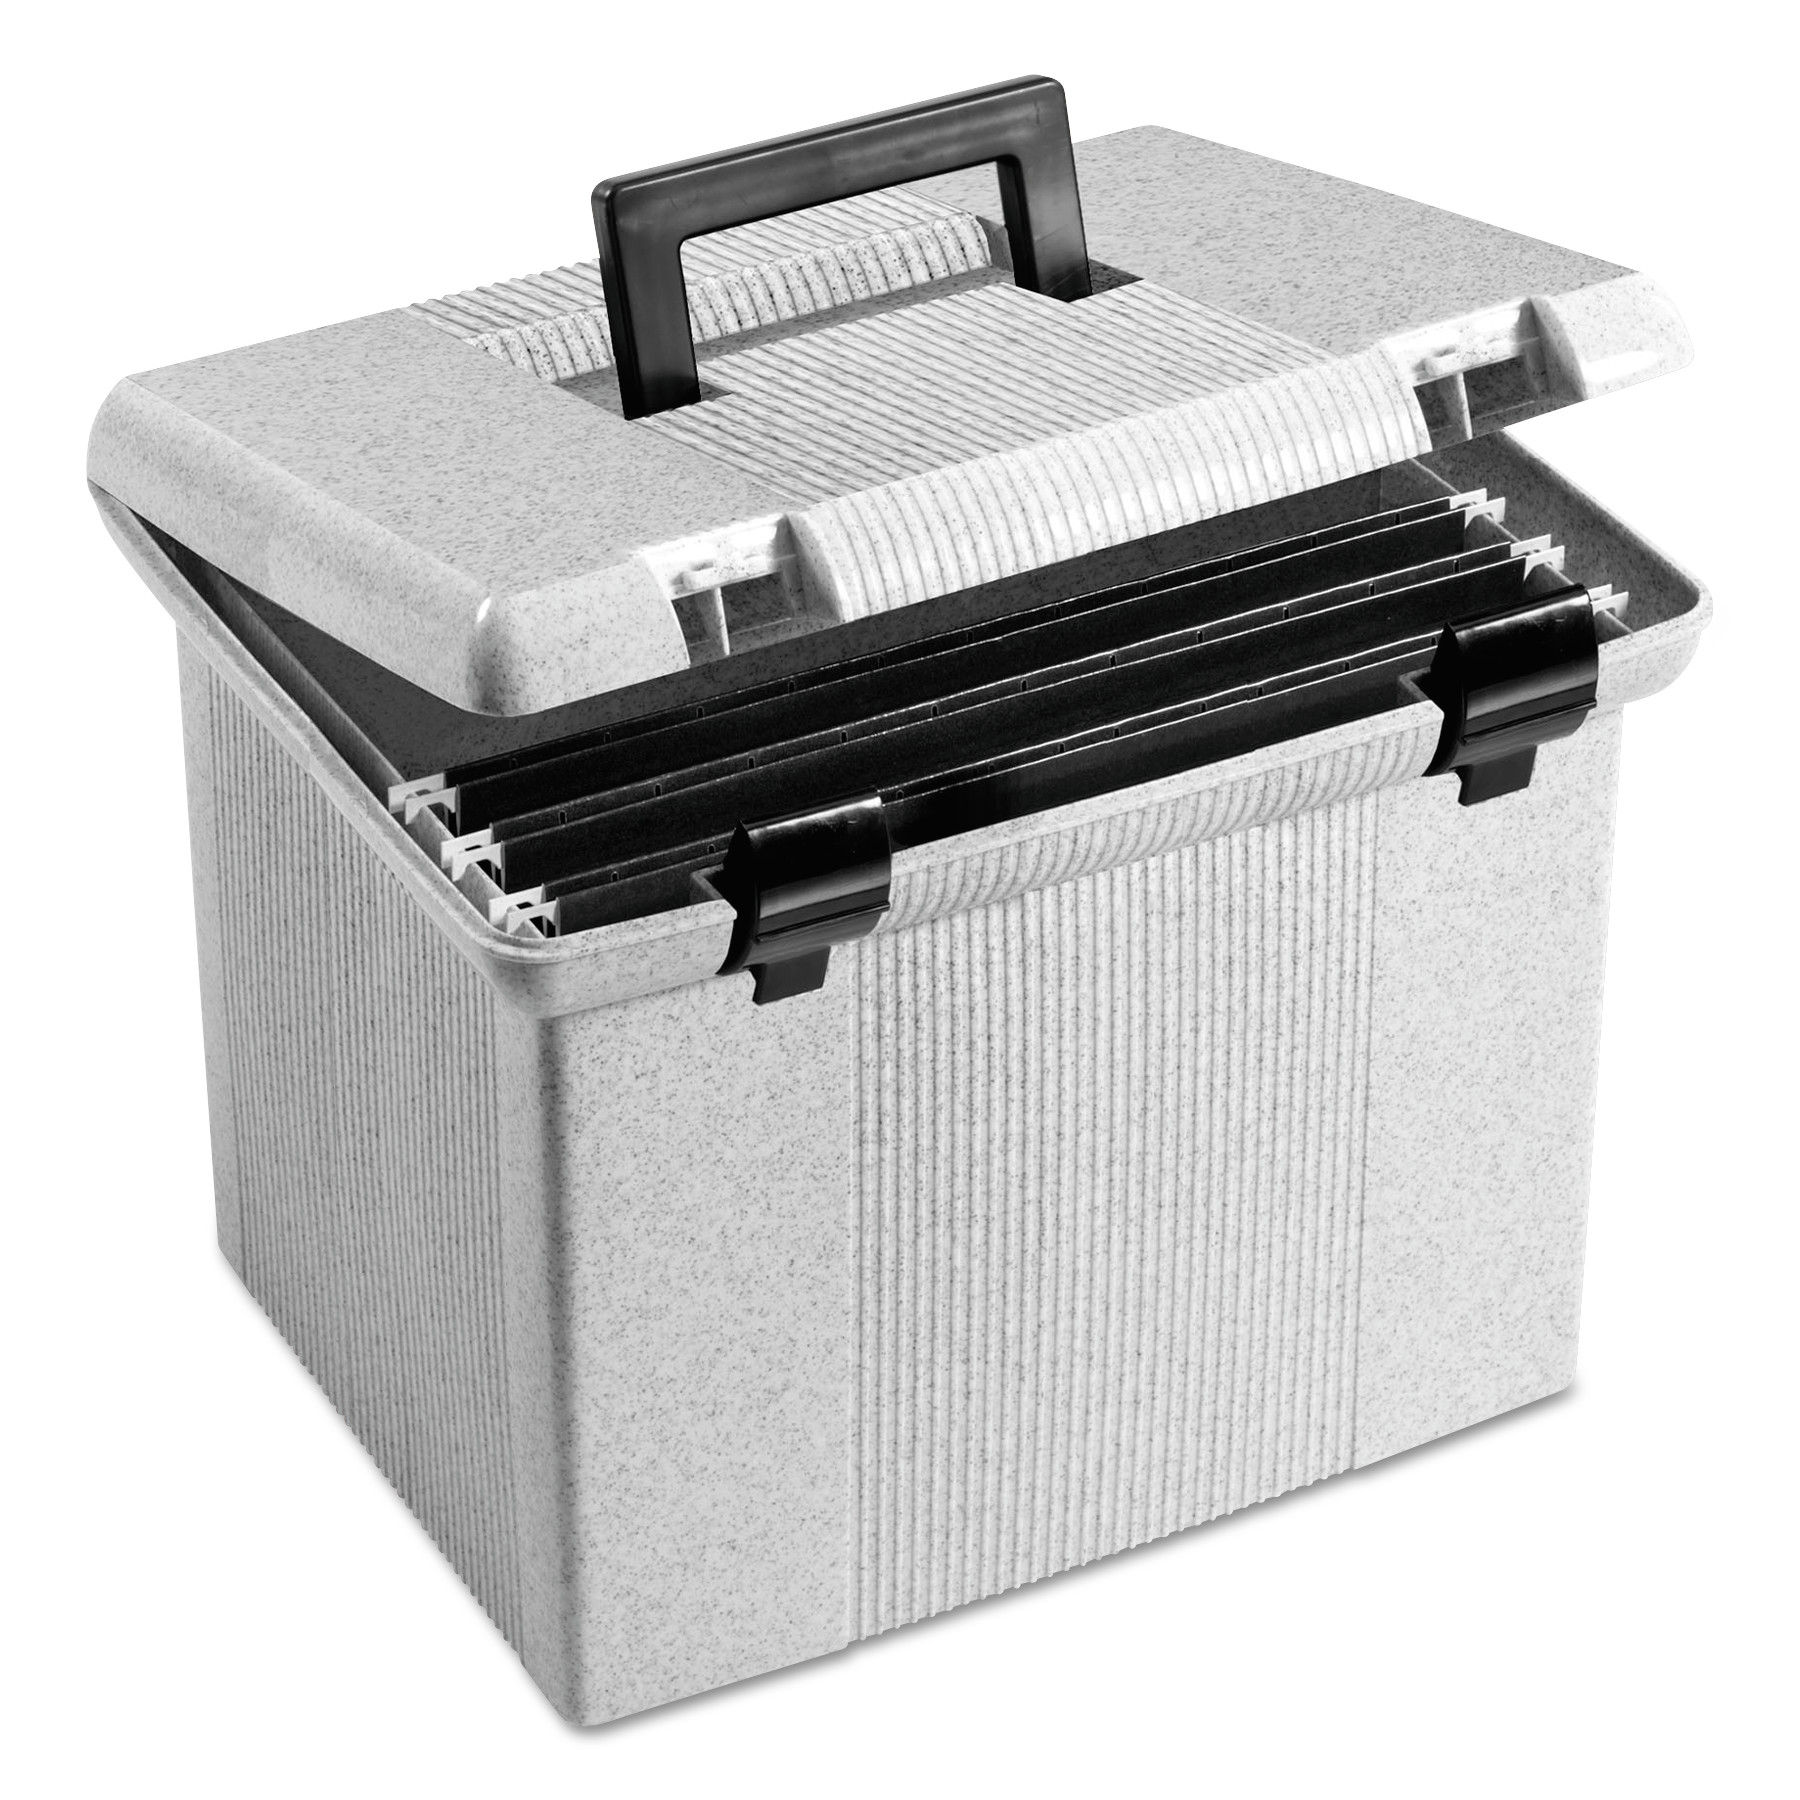  Pendaflex 41747 Portable File Boxes, Letter Files, 13.88 x 14 x 11.13, Granite (PFX41747) 